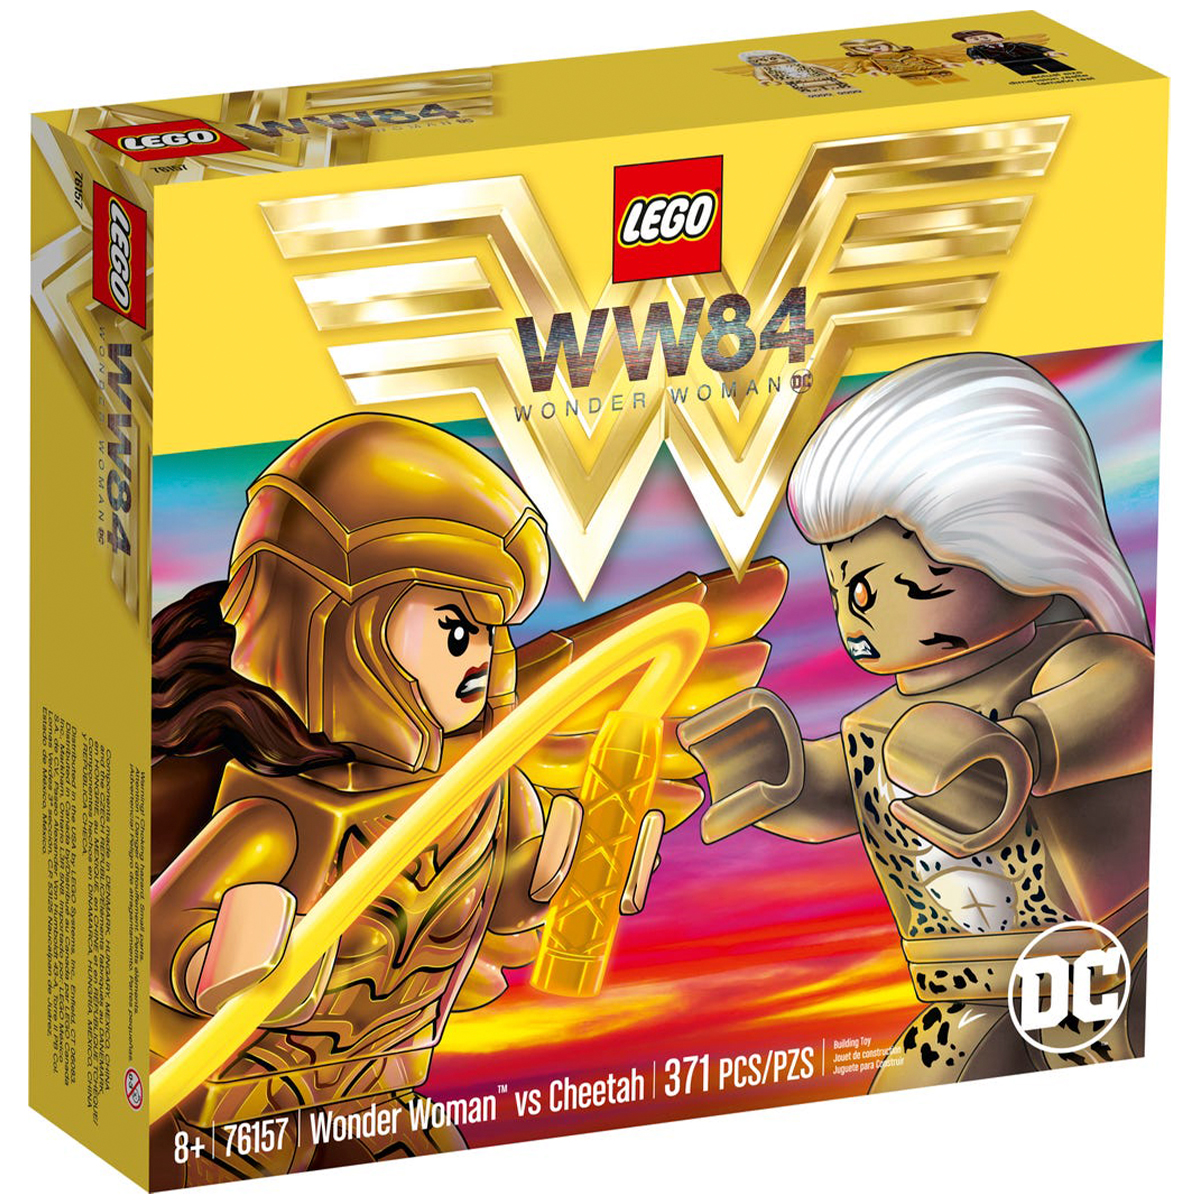 LEGO Super Heroes - Mulher Maravilha vs Cheetah - 76157